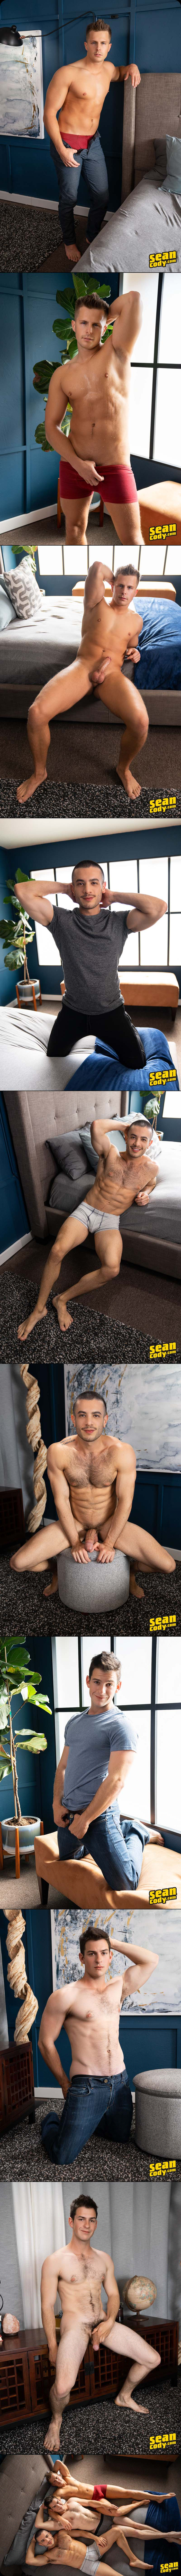 Sean-Cody-Nixon-Archie-Manny-Bareback-Threesome-Big-Average-Cocks-Male-Feet-Hairy-Chest-1